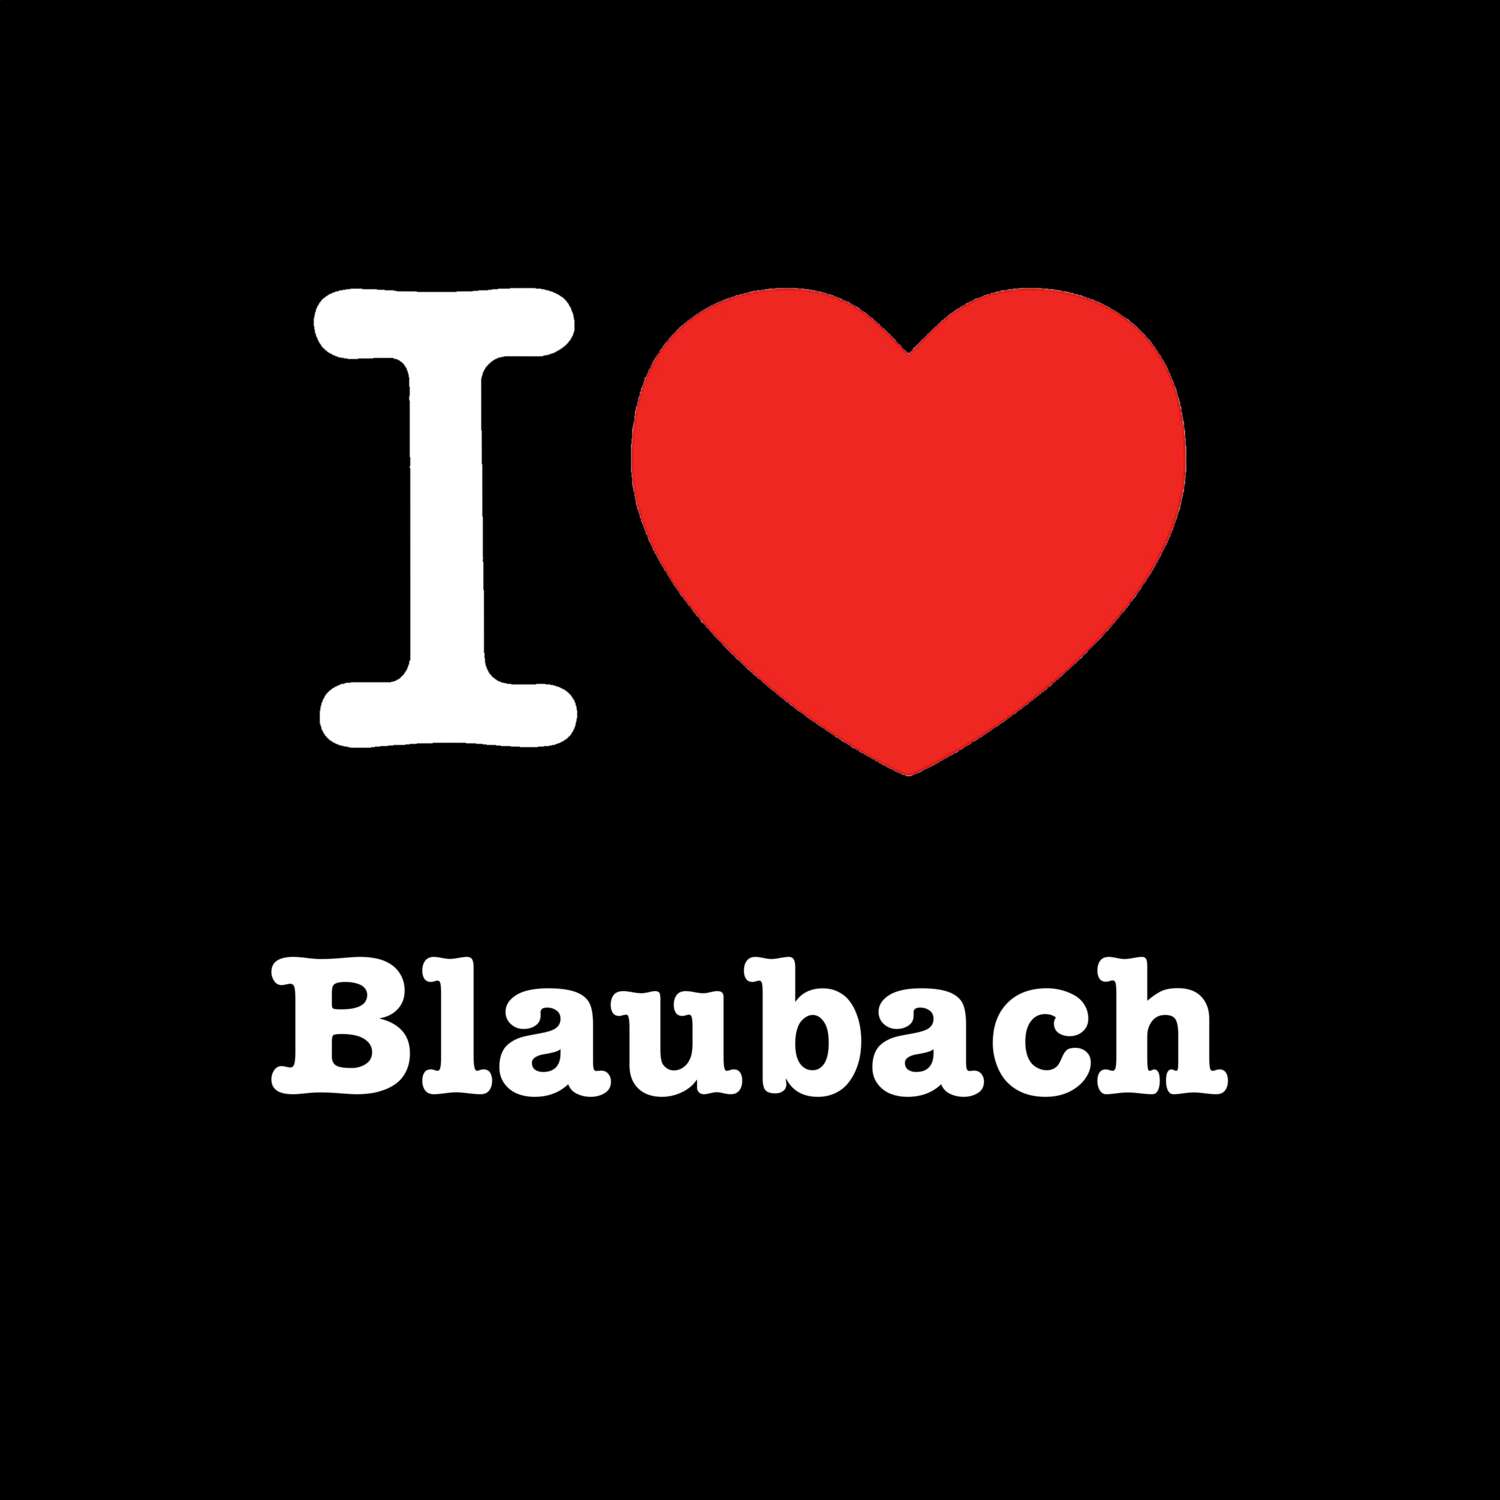 Blaubach T-Shirt »I love«